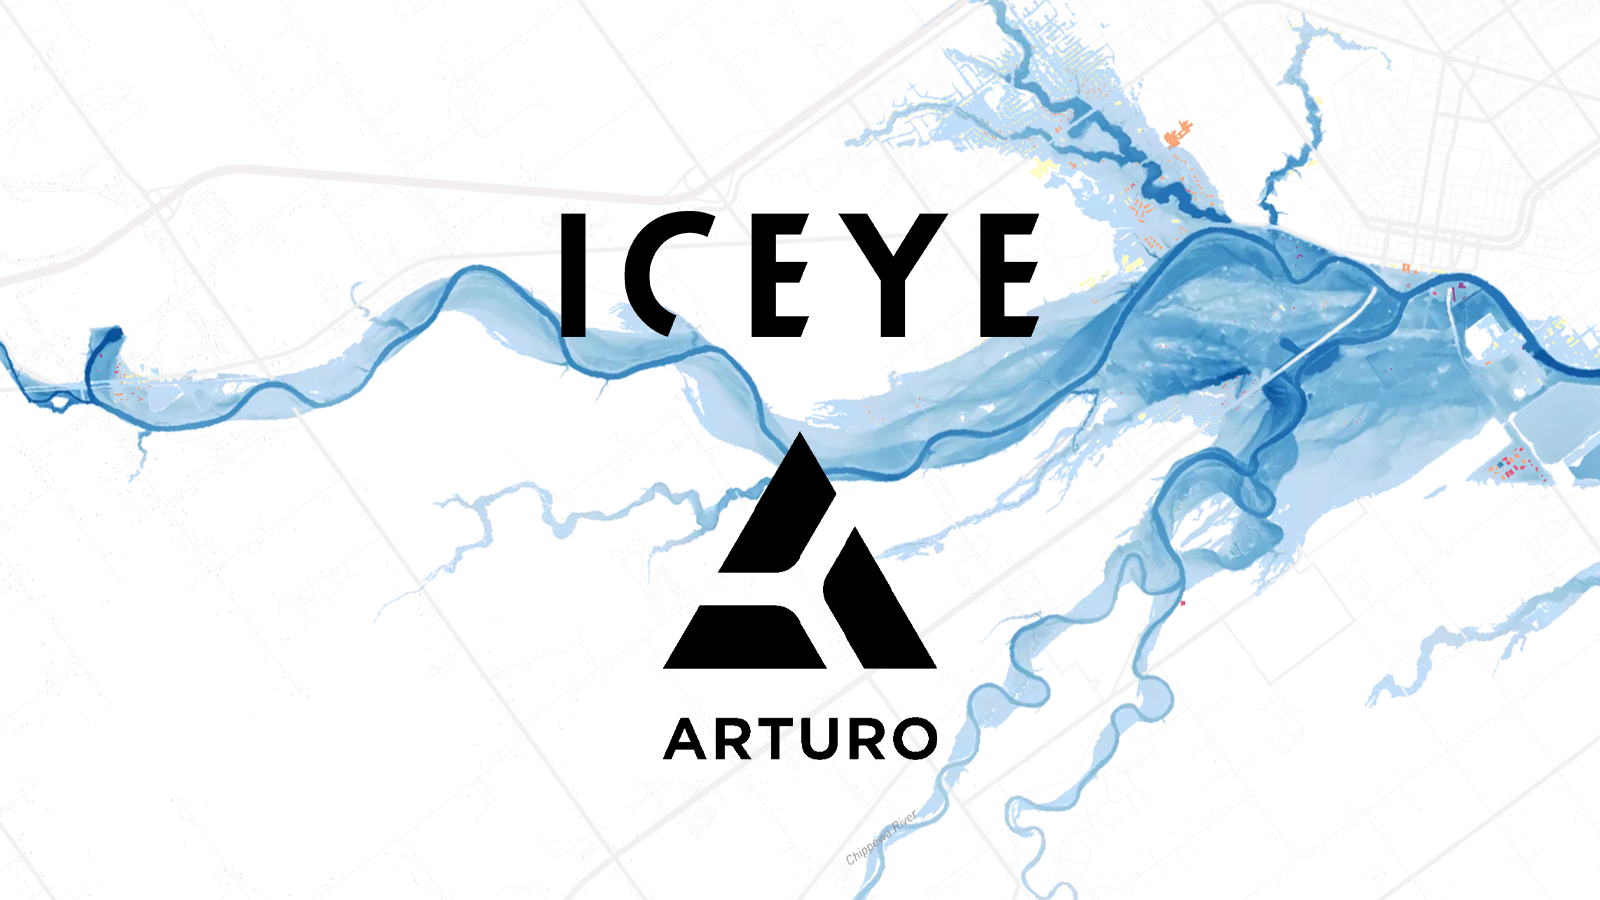 ICEYE and Arturo logos on top of ICEYE's flood visualization.